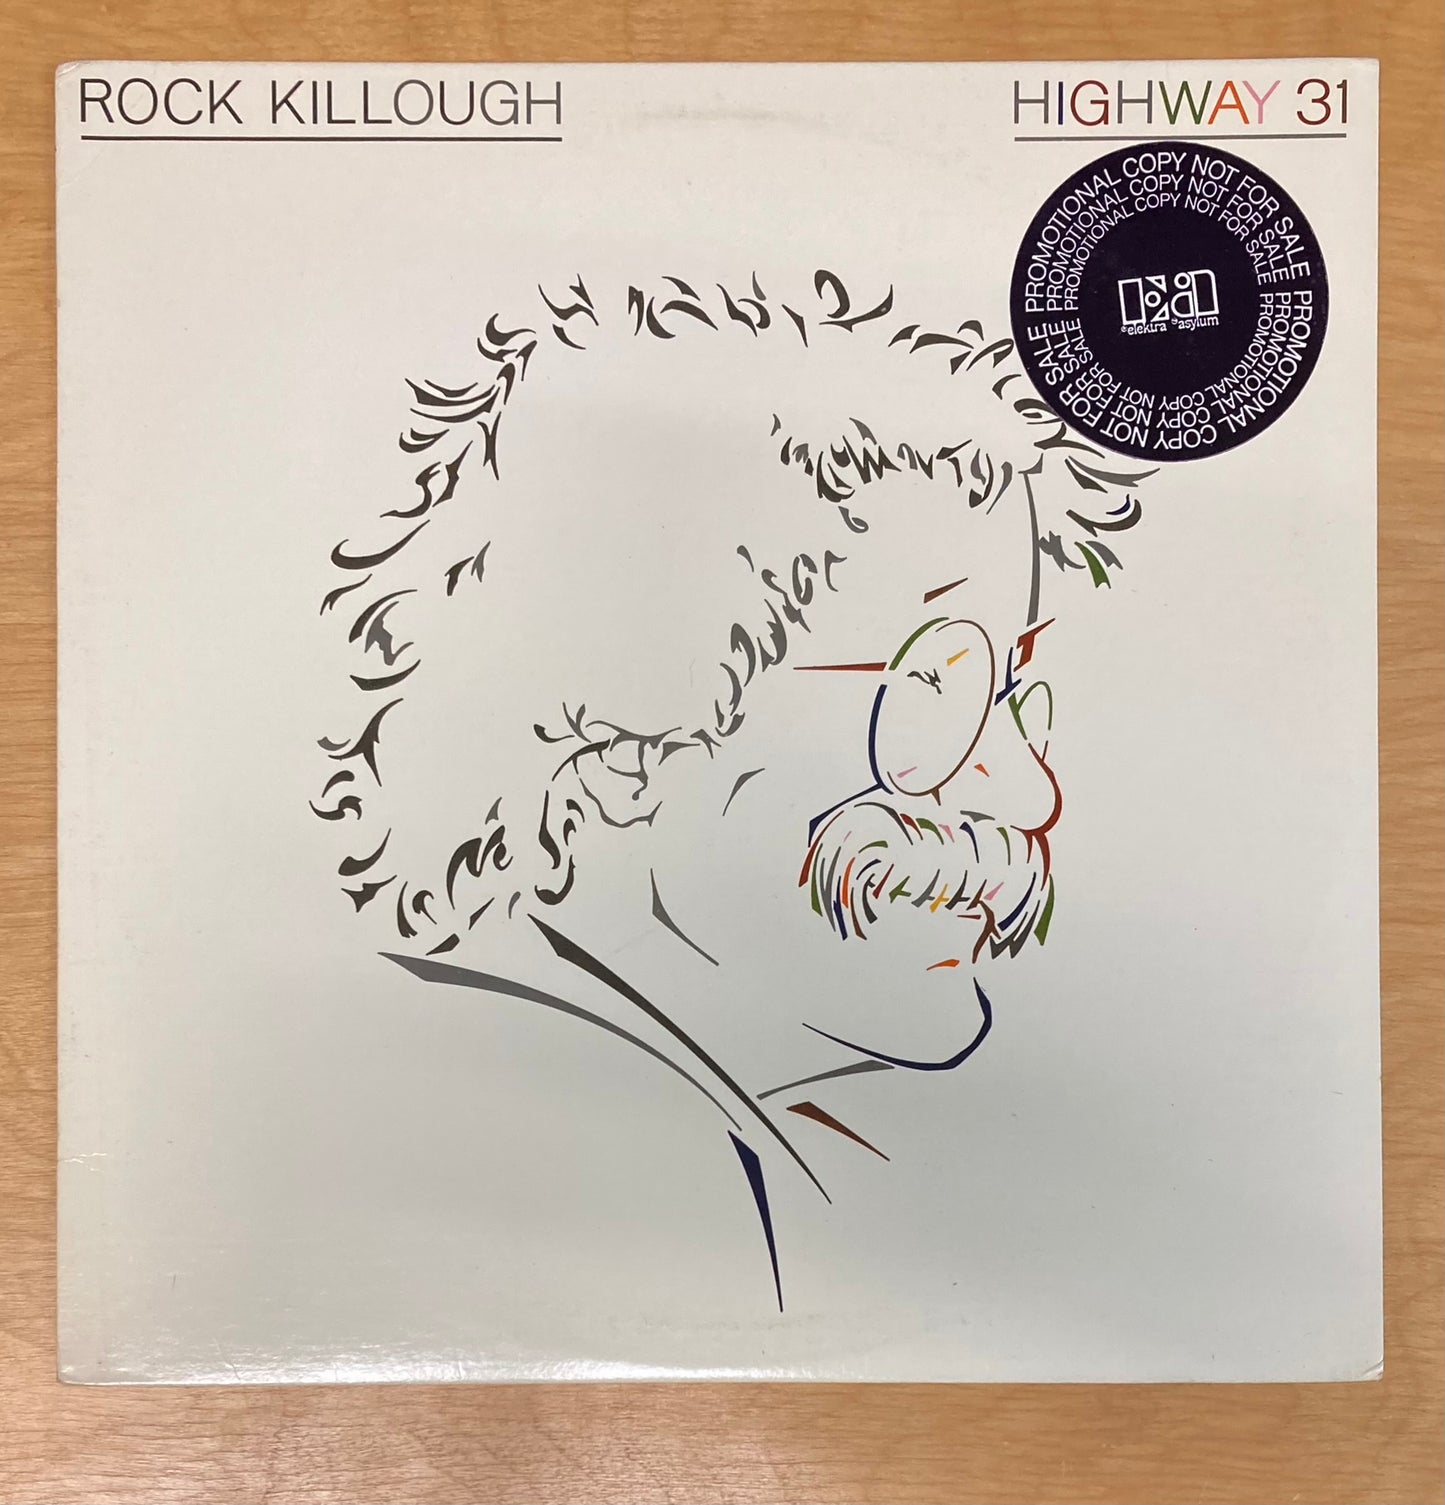 Highway 31 - Rock Killough *Promotional Copy*